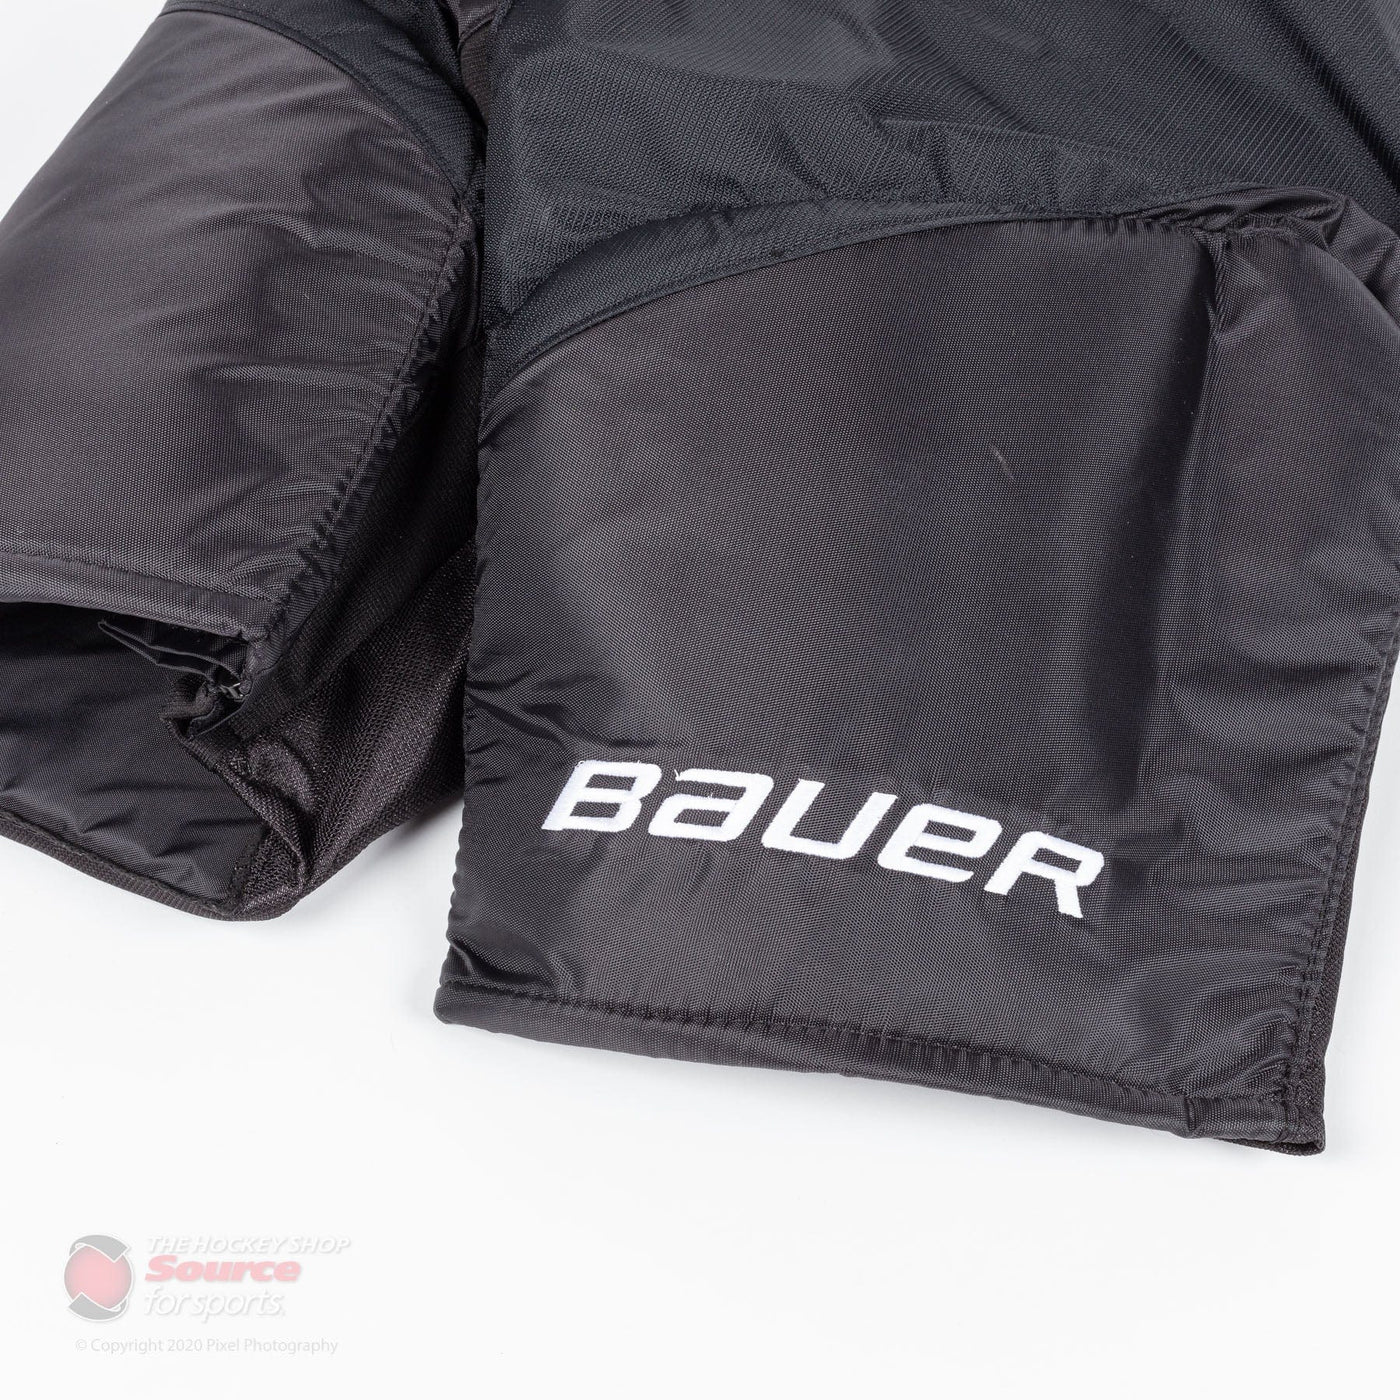 Bauer Vapor X2.9 Junior Hockey Pants